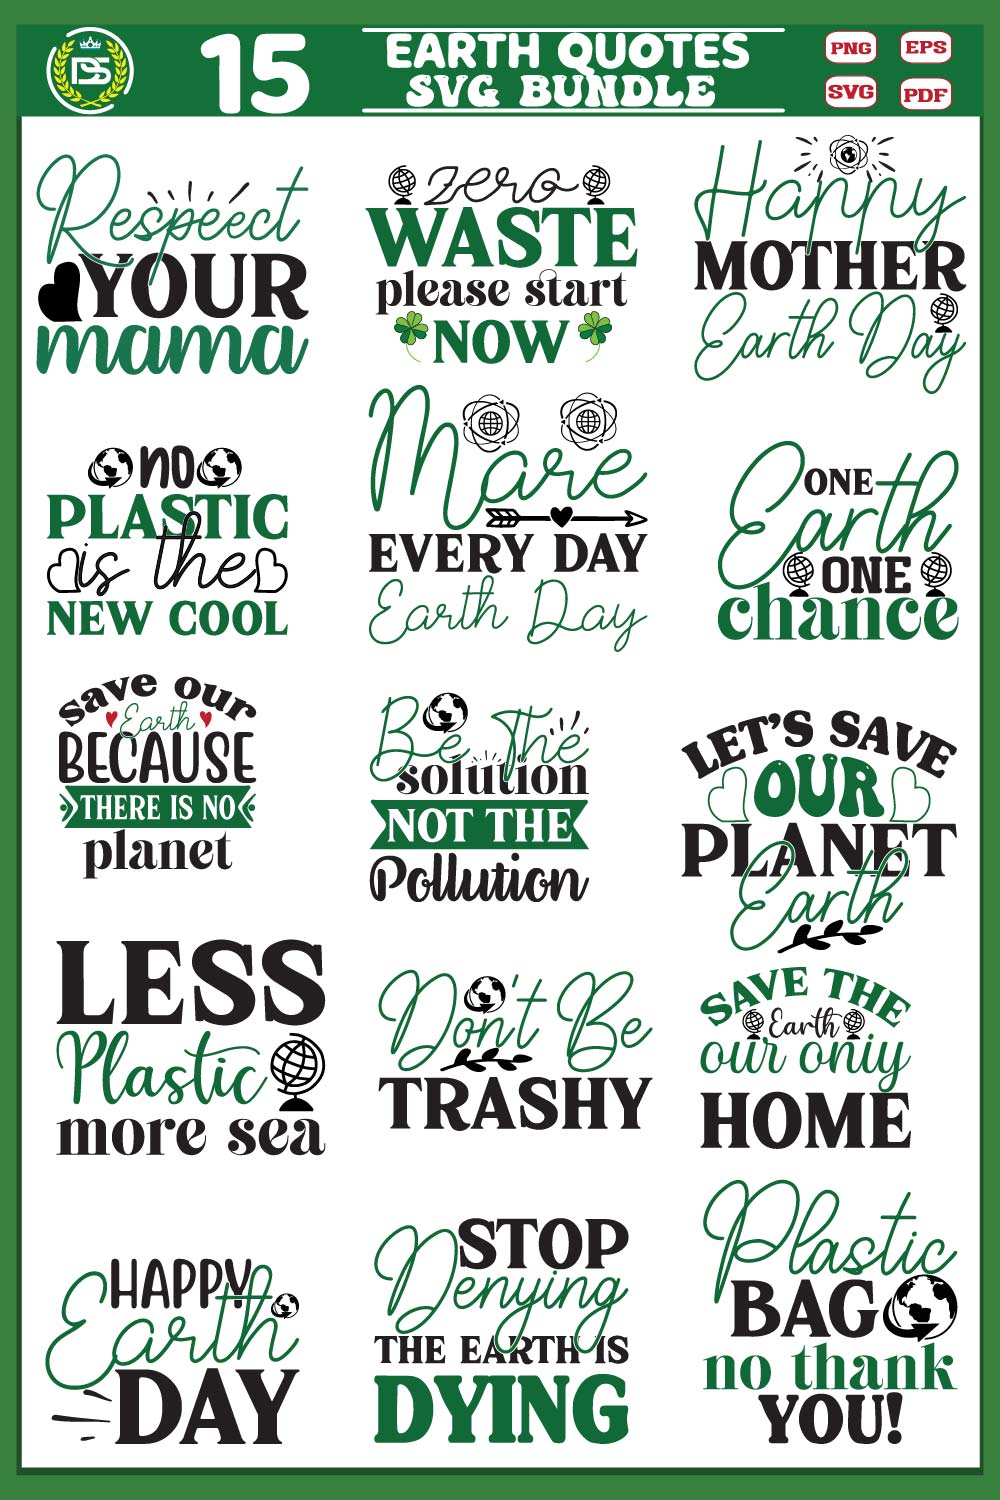 Earth Quotes SVG design Bundle pinterest preview image.